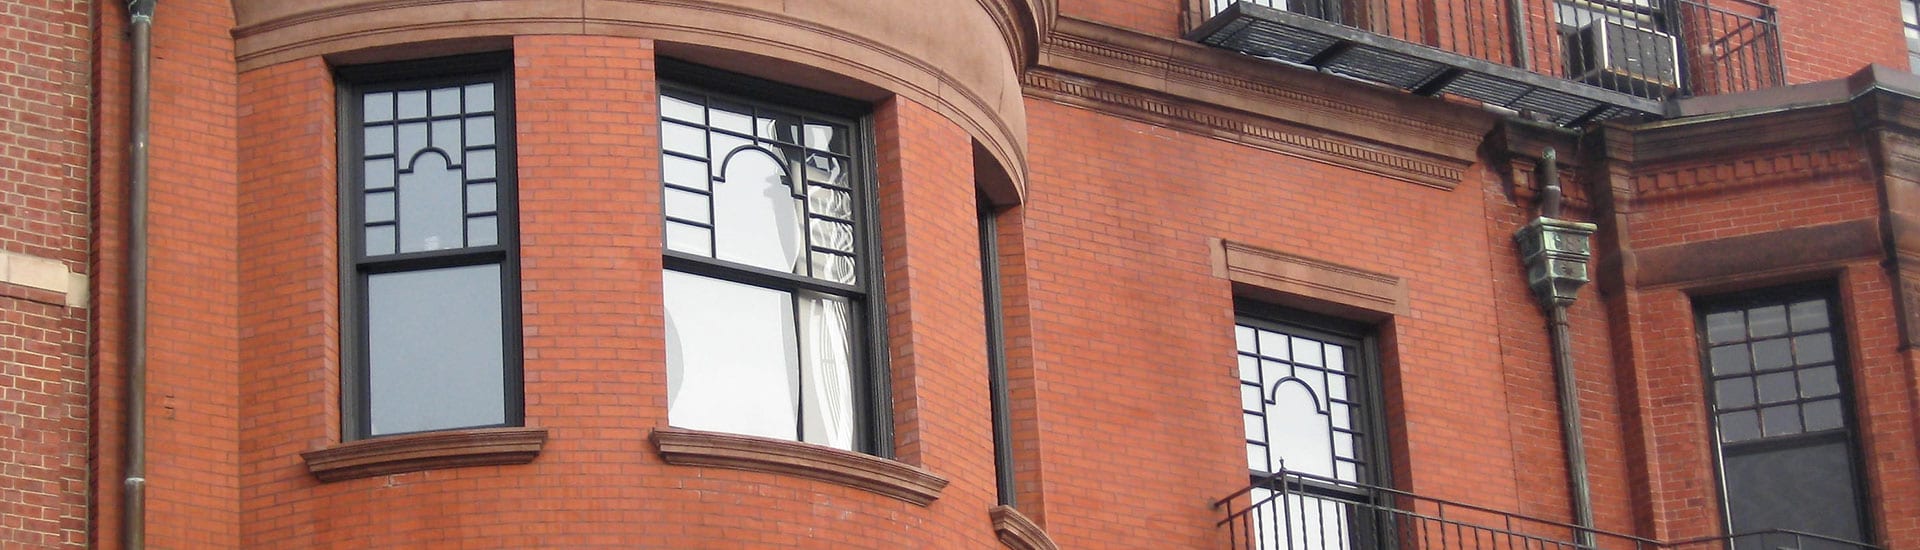 custom double hung windows in brownstone